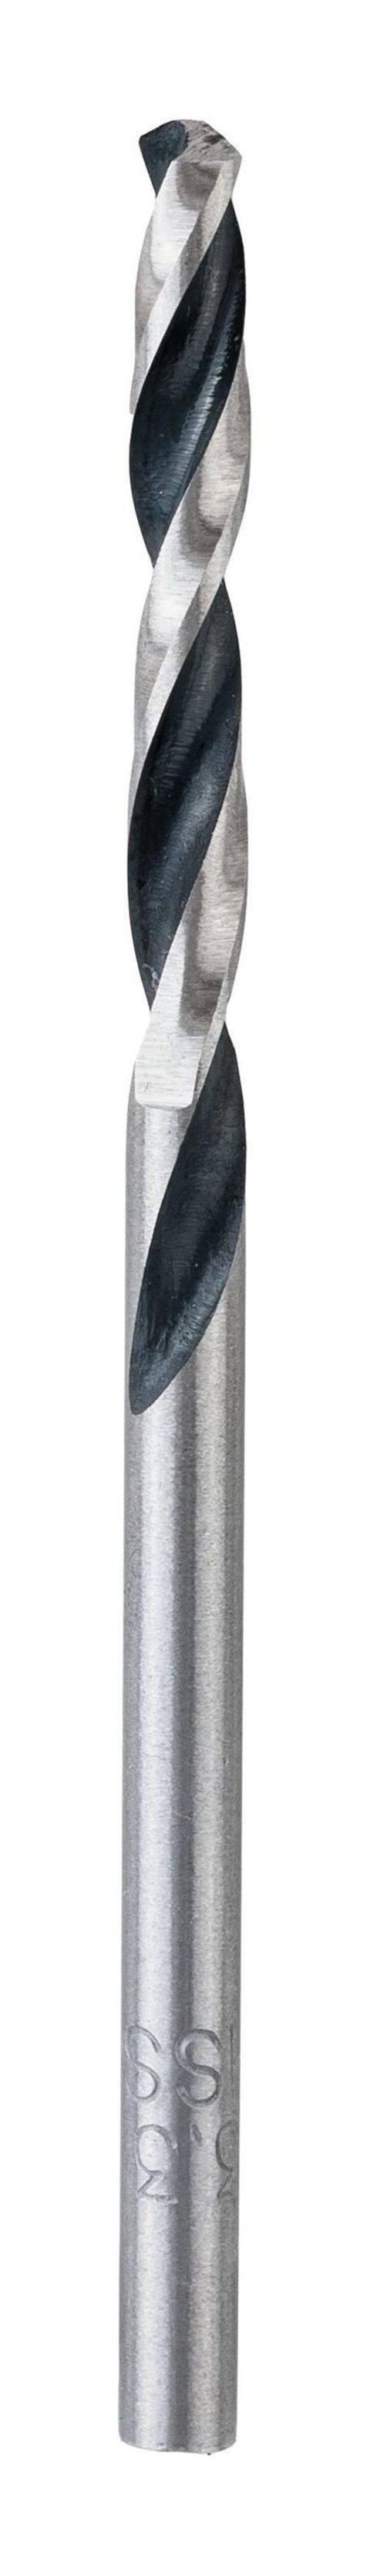 BOSCH HSS Metallspiralbohrer (10 3,3 (DIN - PointTeQ mm - Metallbohrer, 338) Stück), 10er-Pack